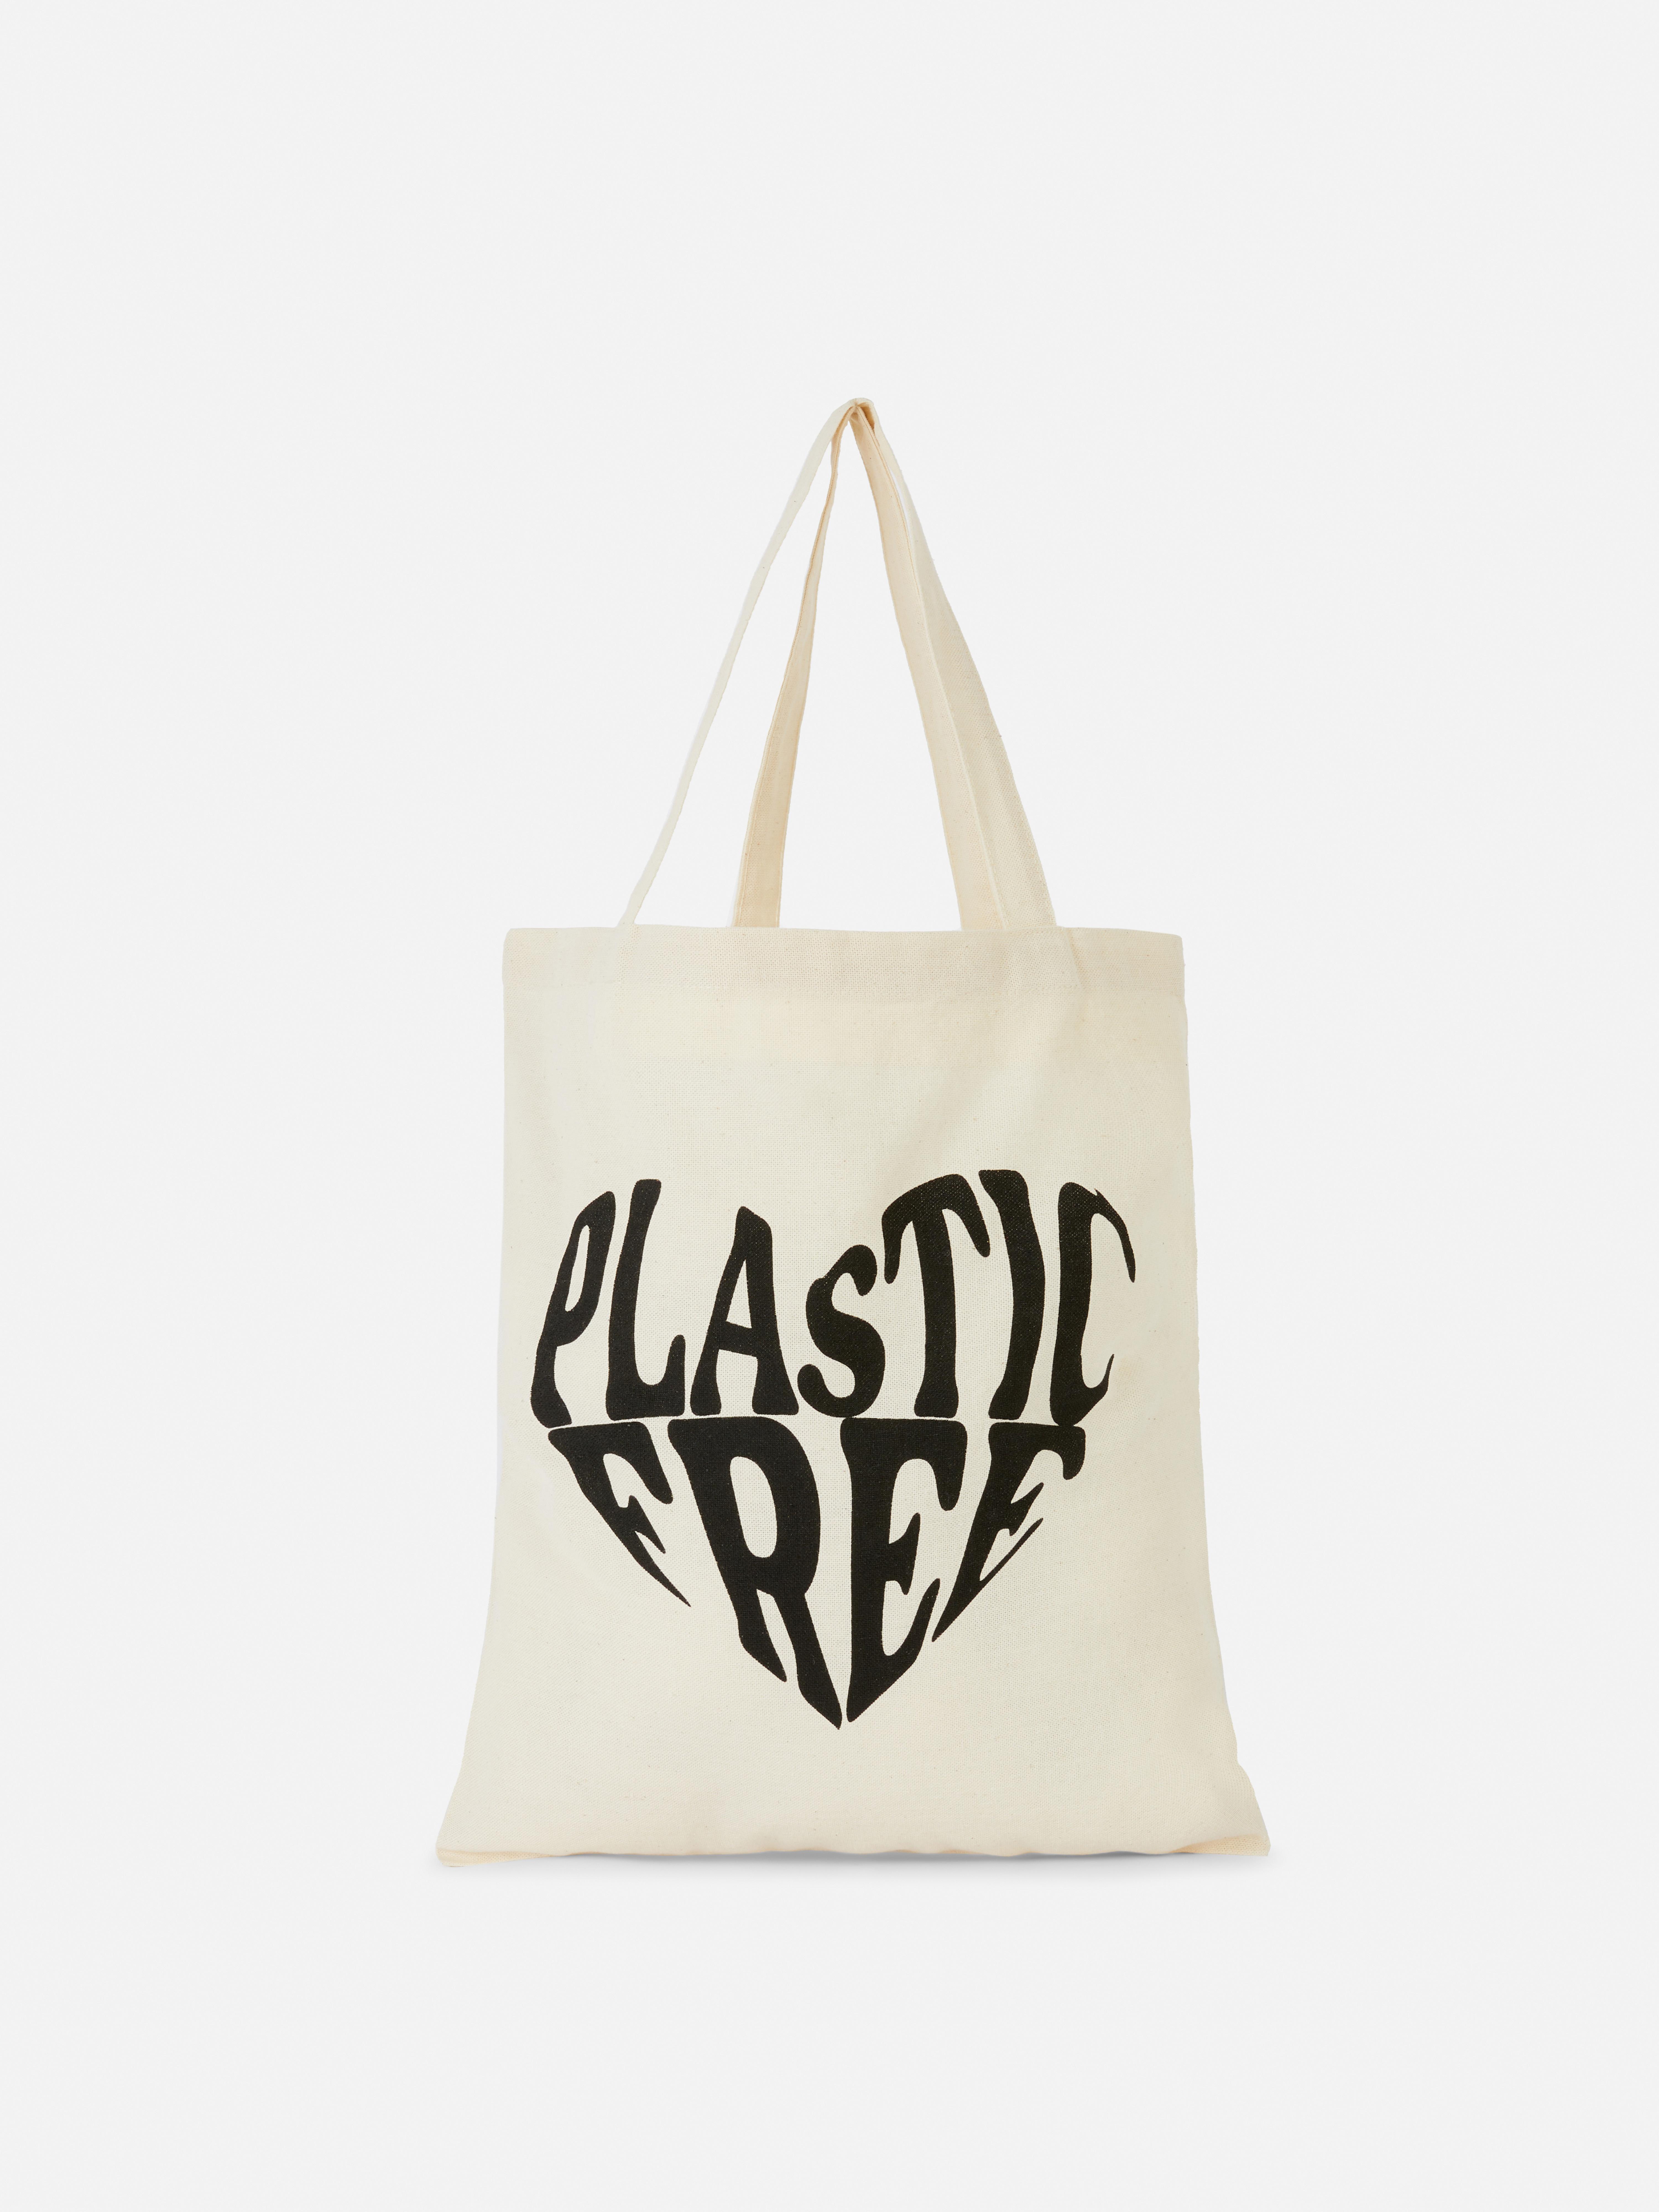 Plastic free canvas tote bag